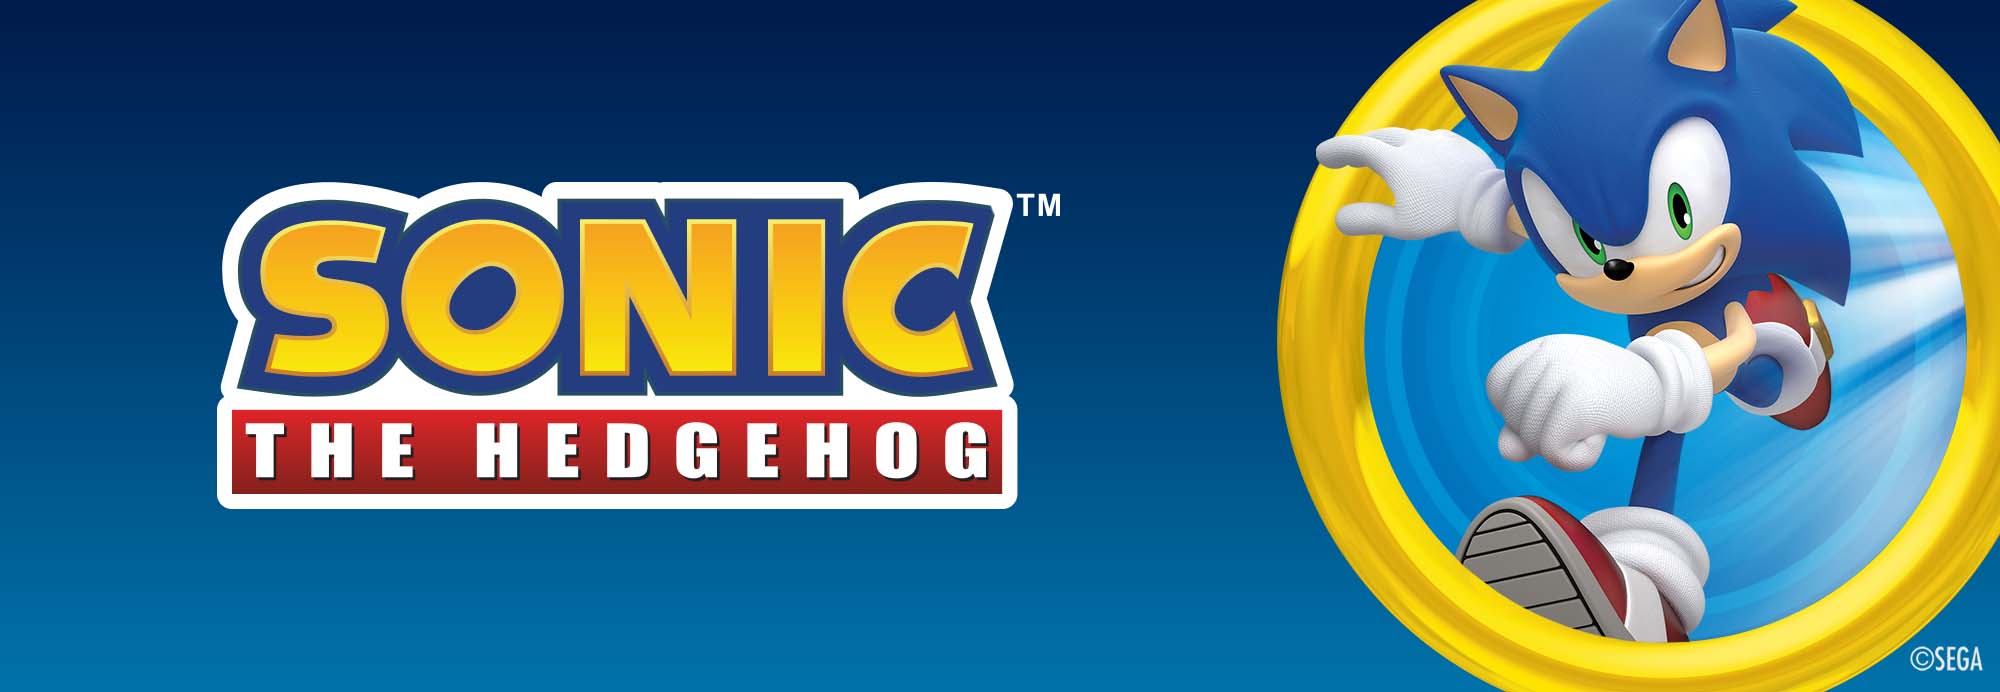 Sonic the Hedgehog desktop banner